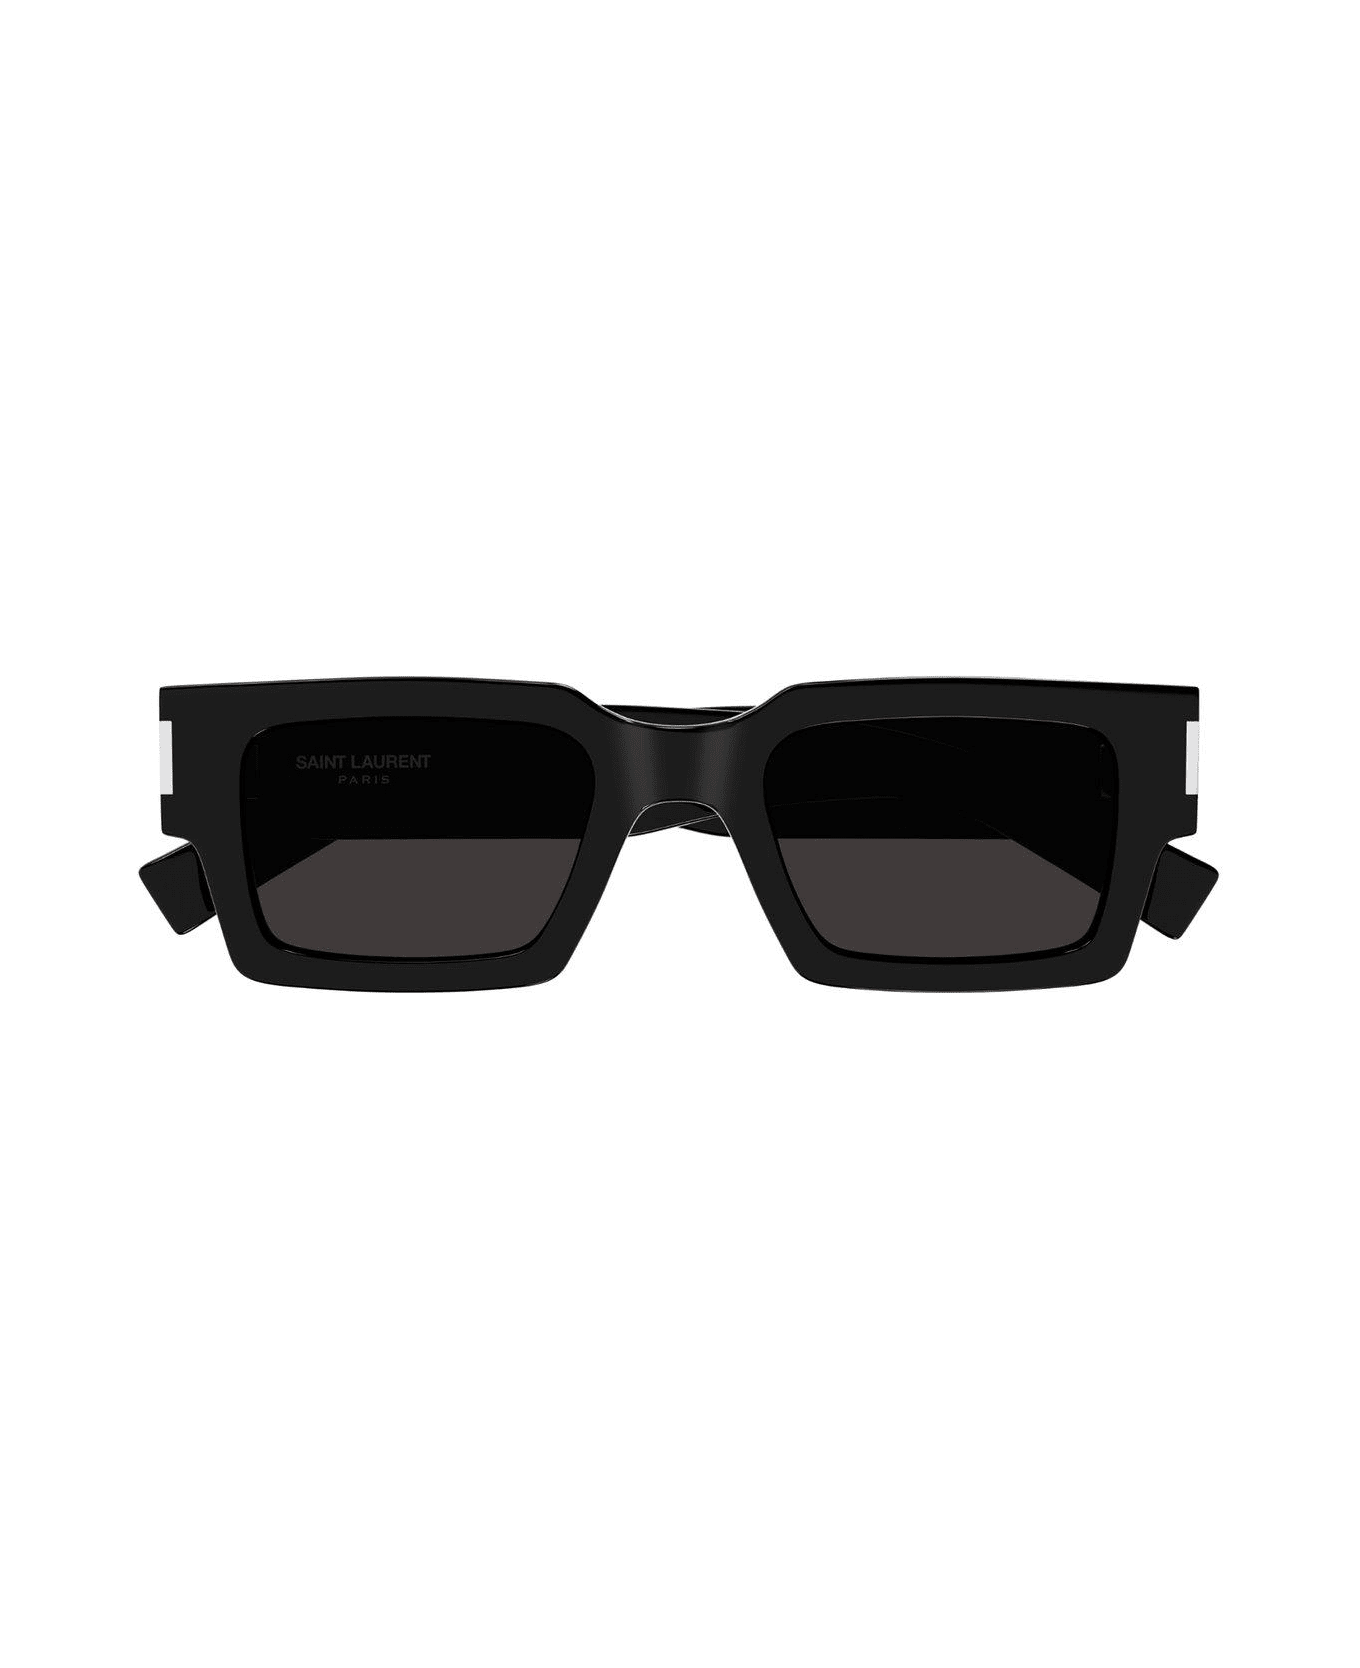 Saint Laurent Eyewear Core Square Frame Sunglasses - 001 black crystal grey サングラス